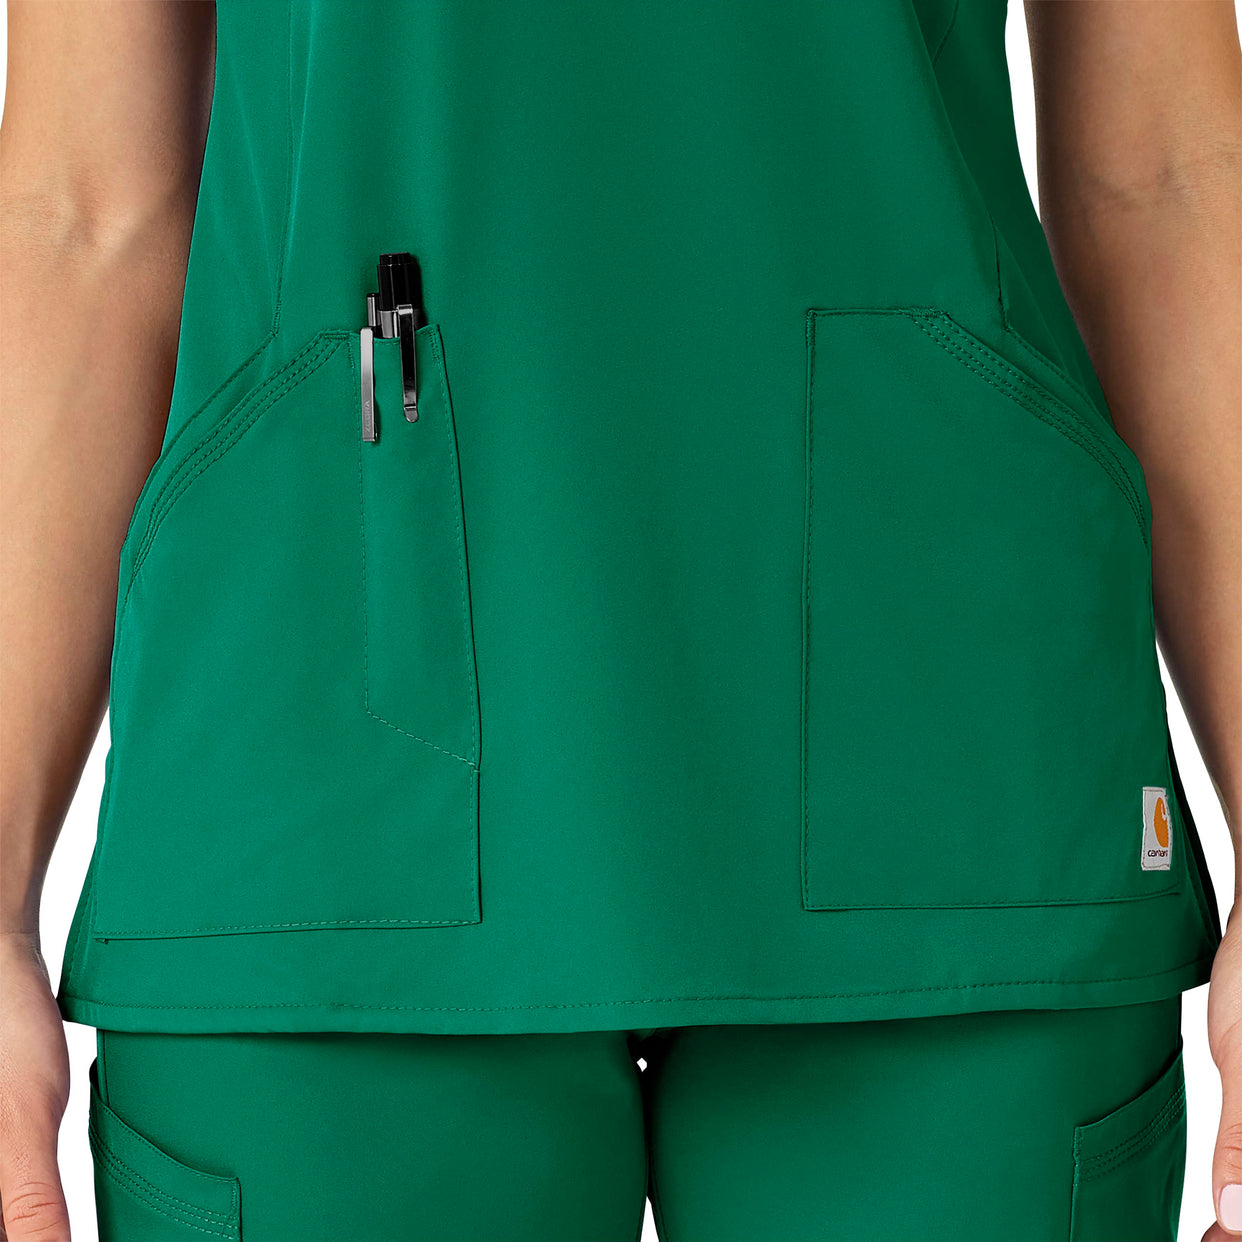 Force Liberty Women's Multi-Pocket V-Neck Scrub Top Hunter Green front detail